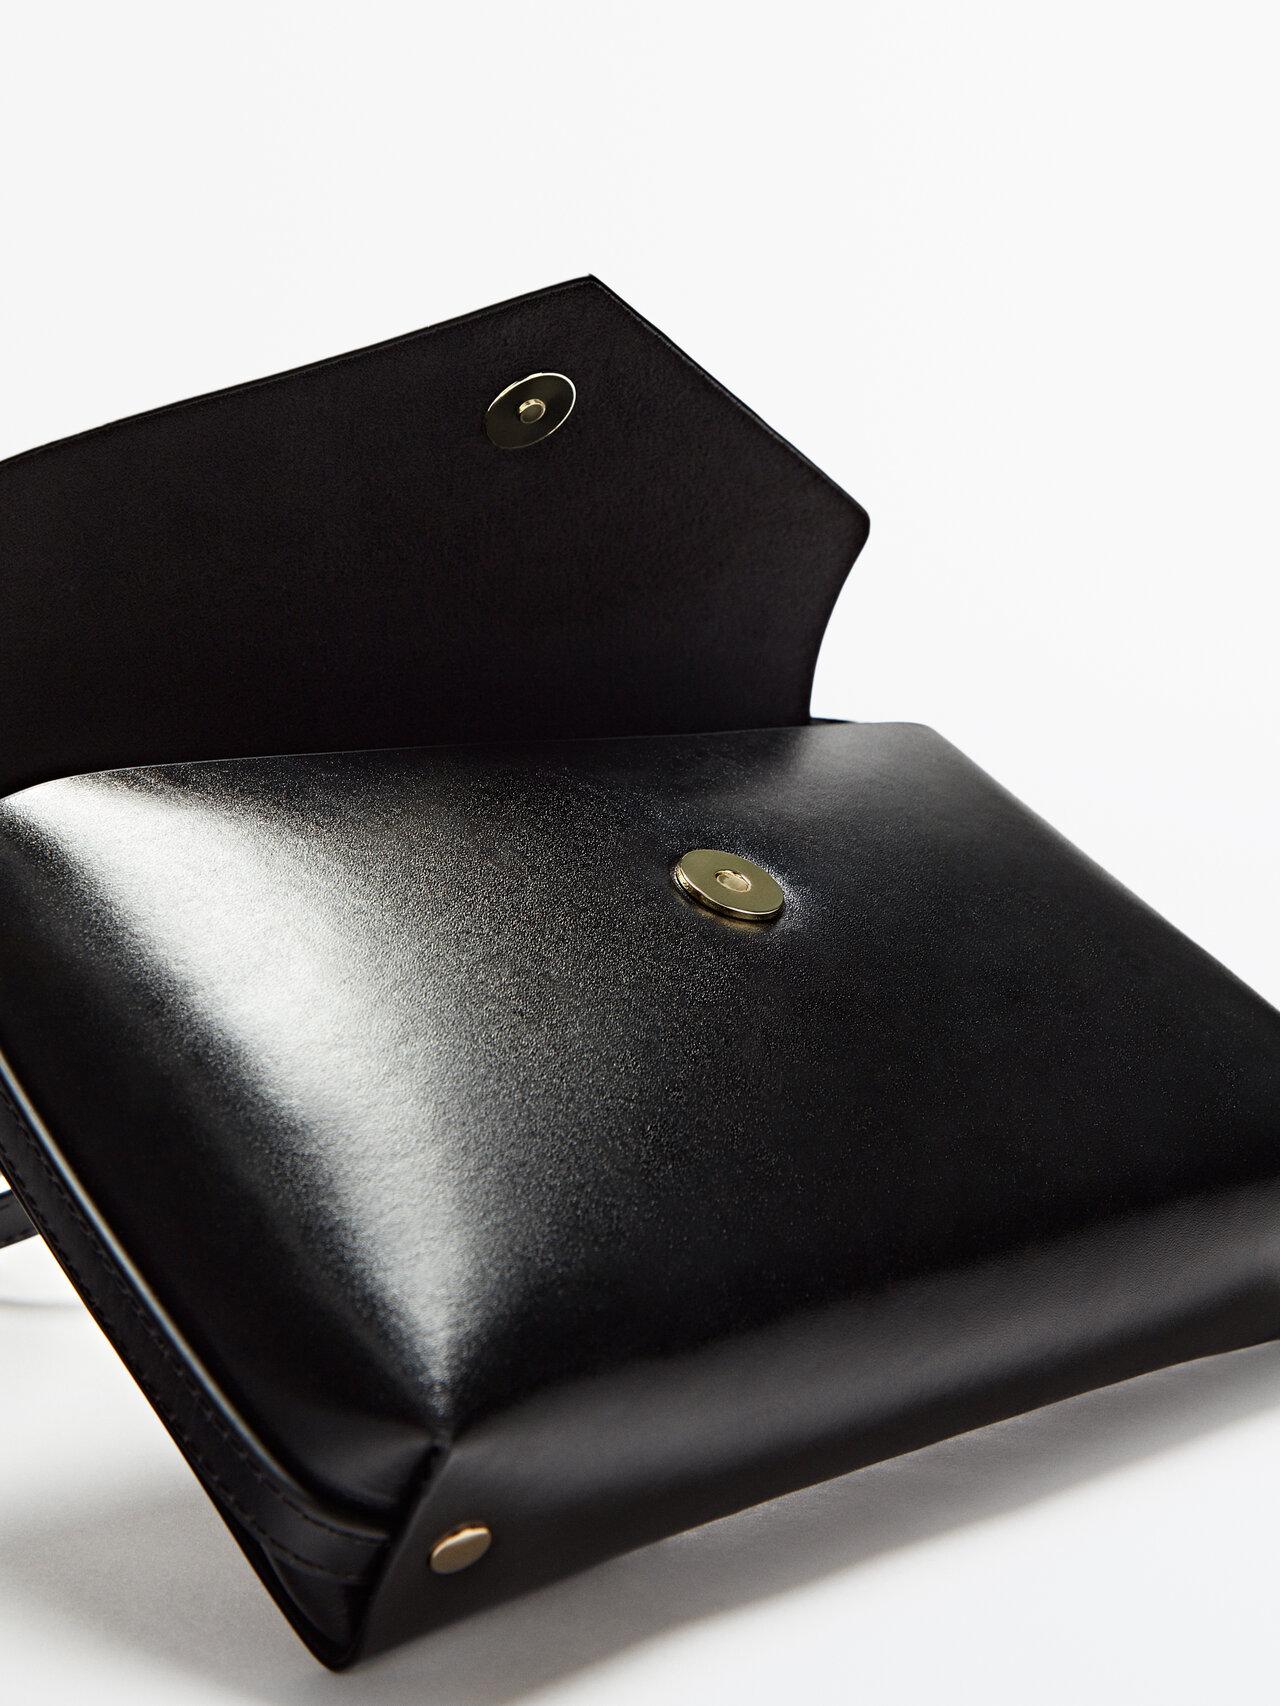 MASSIMO DUTTI Leather Crossbody Clutch Bag in Black | Lyst